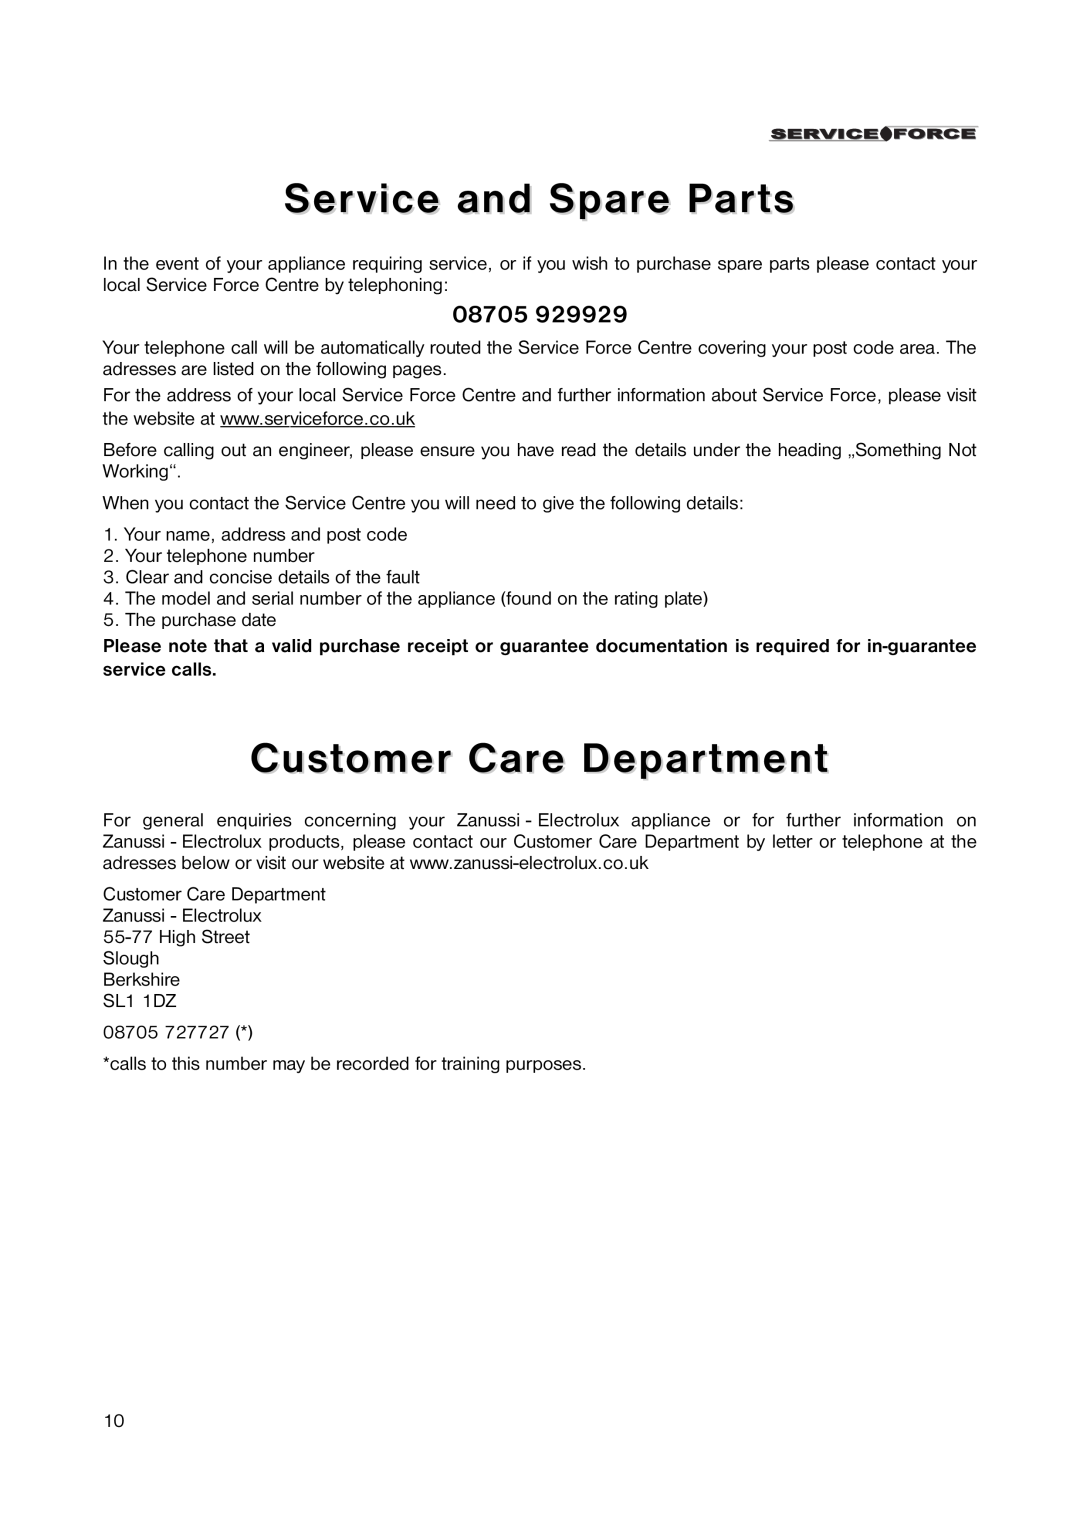 Zanussi ZEUC 0545 manual Service and Spare Parts, Customer Care Department, 08705 